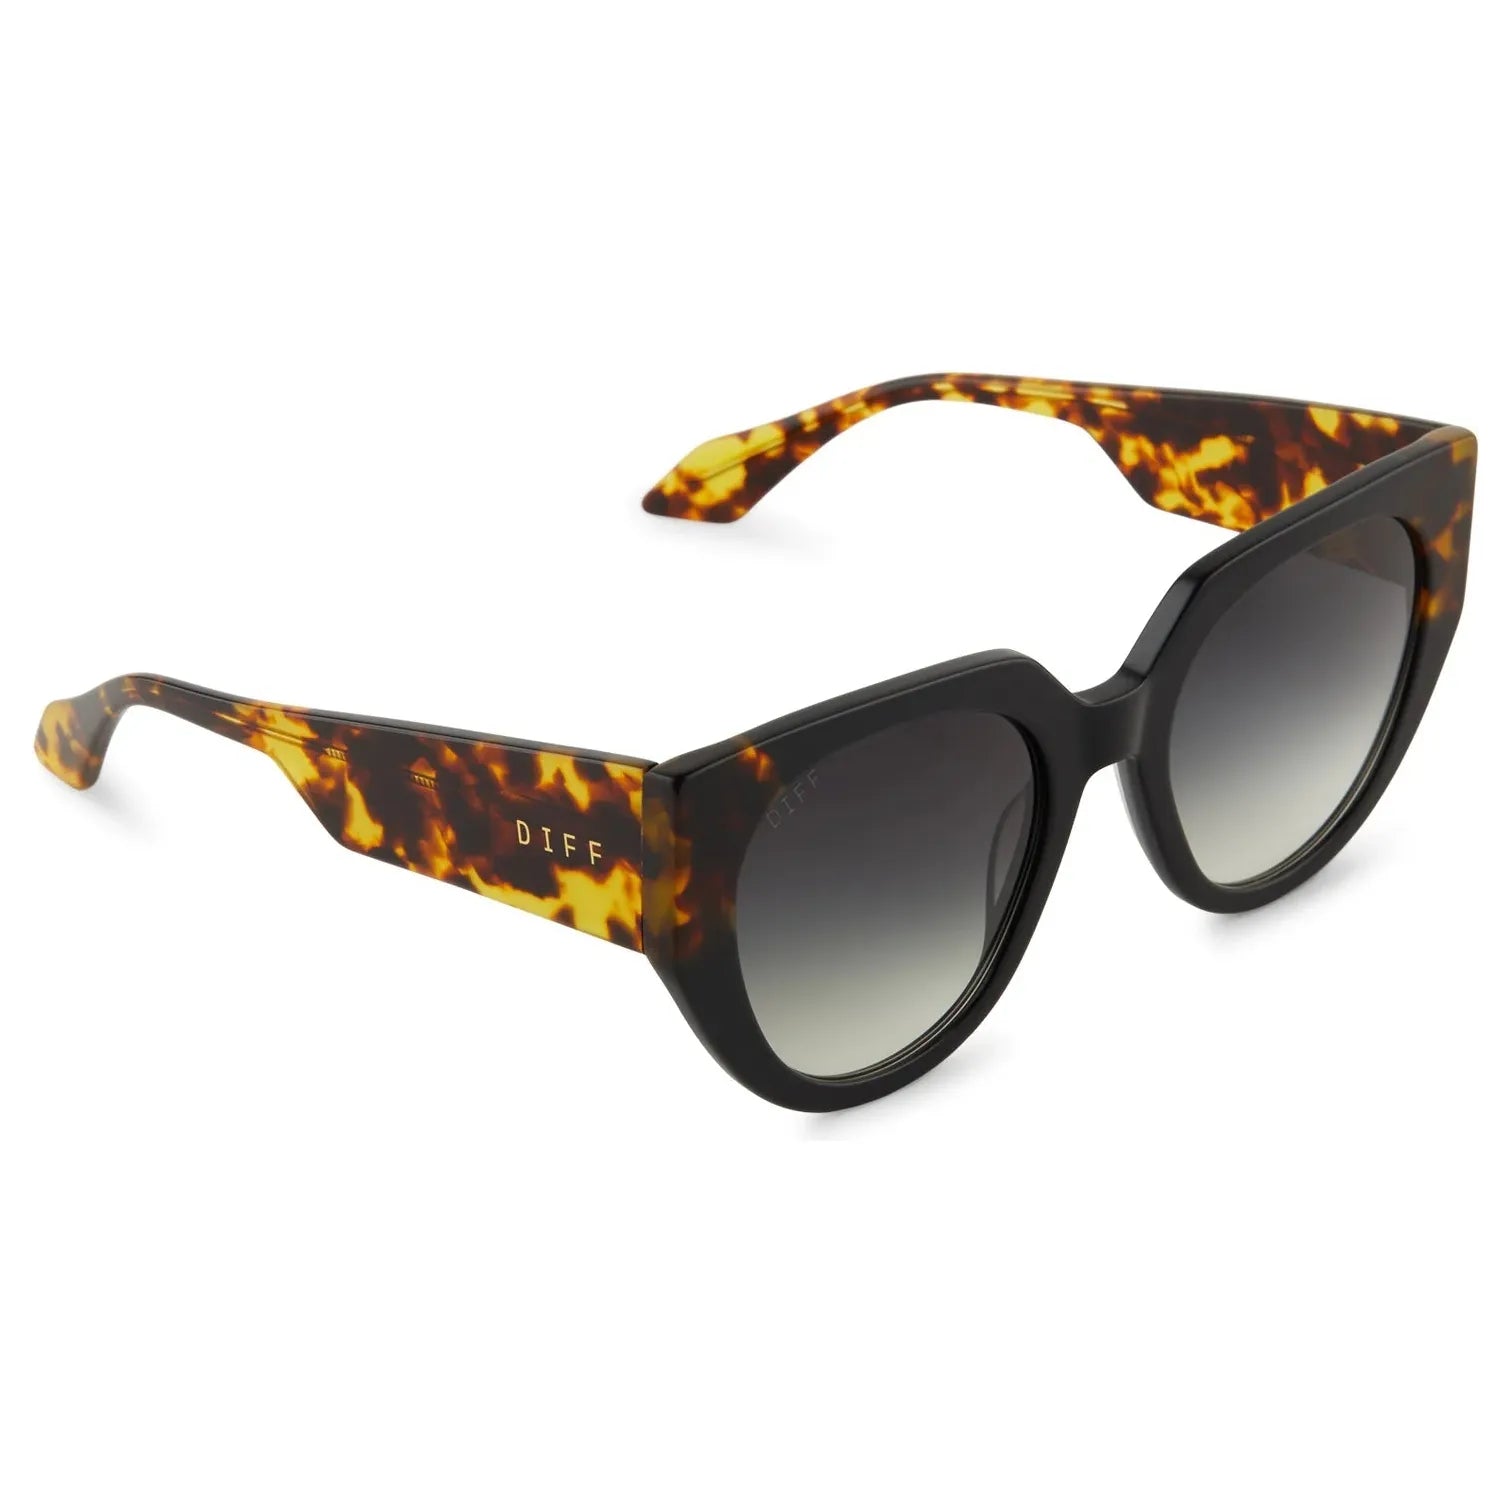 Diff Ivy Matte Black / Matte Amber Tortoise Corner Sunglasses - Miles and Bishop